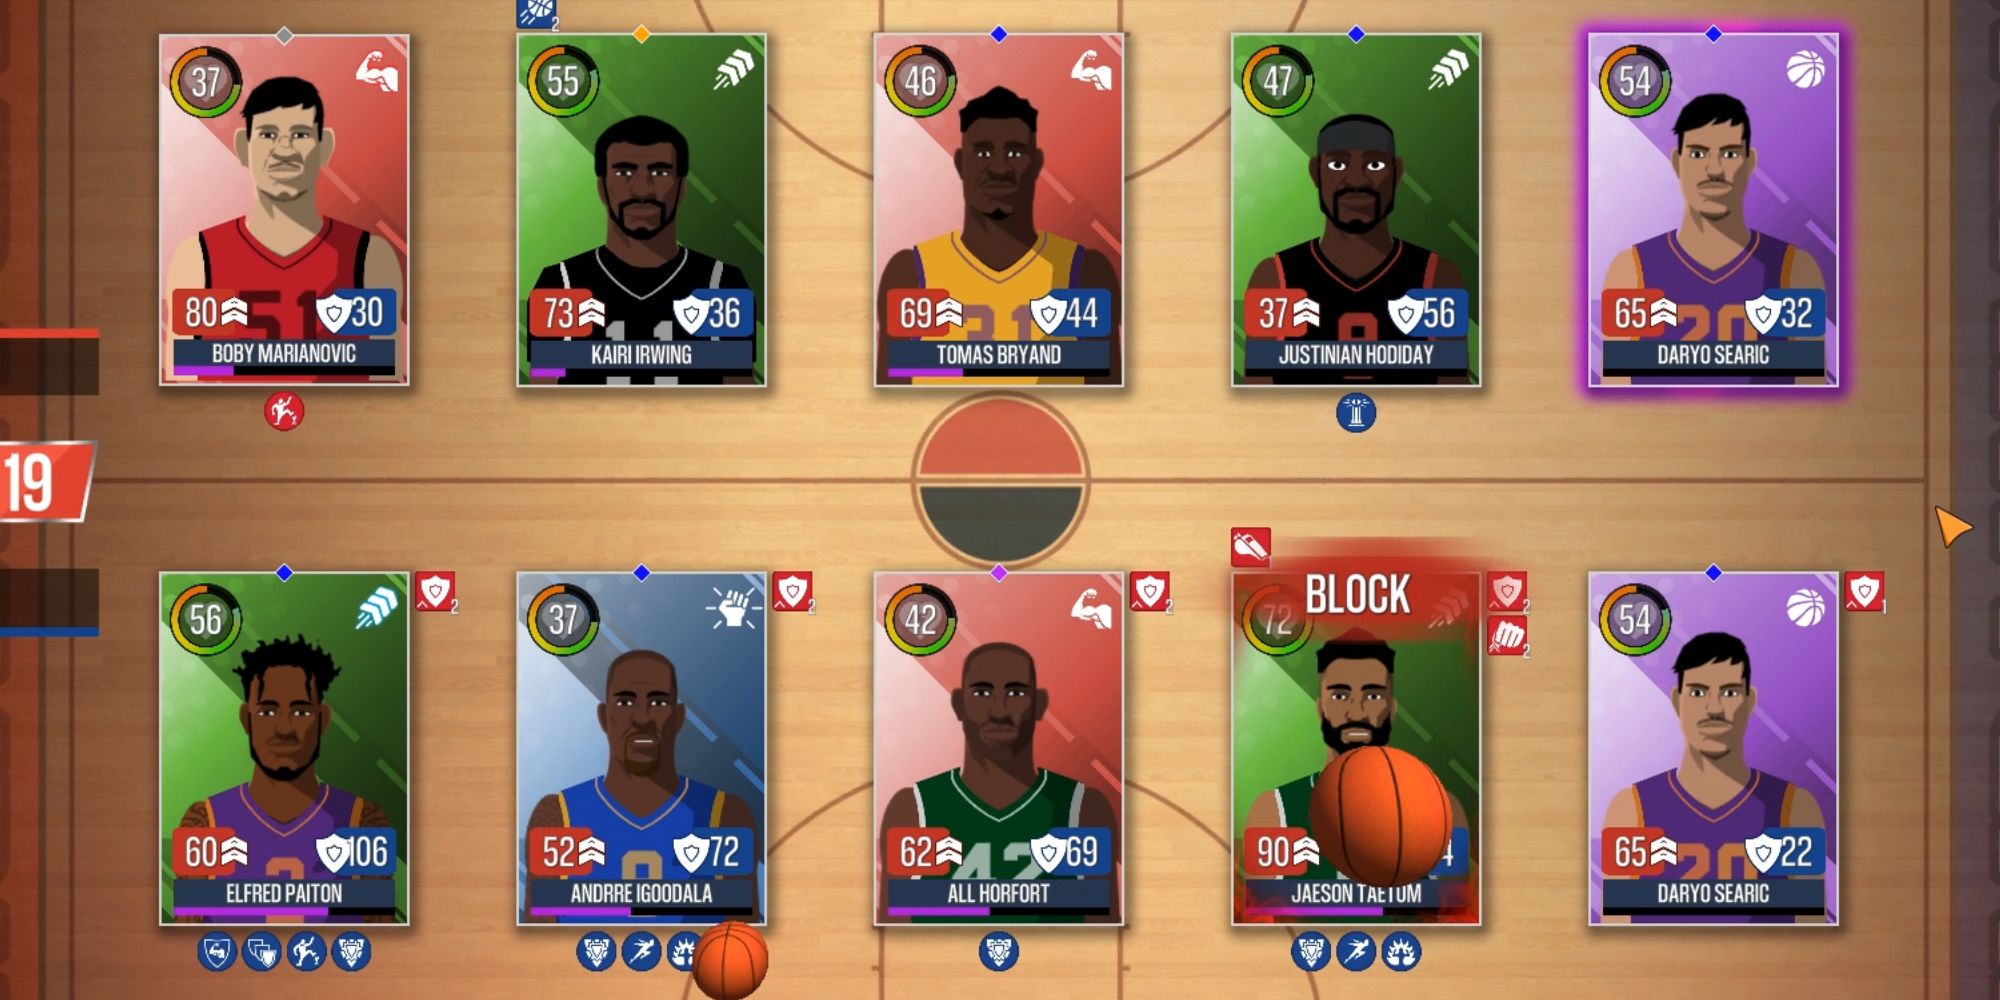 A player blocks a shot in the basketball card game Dream Team Basketball